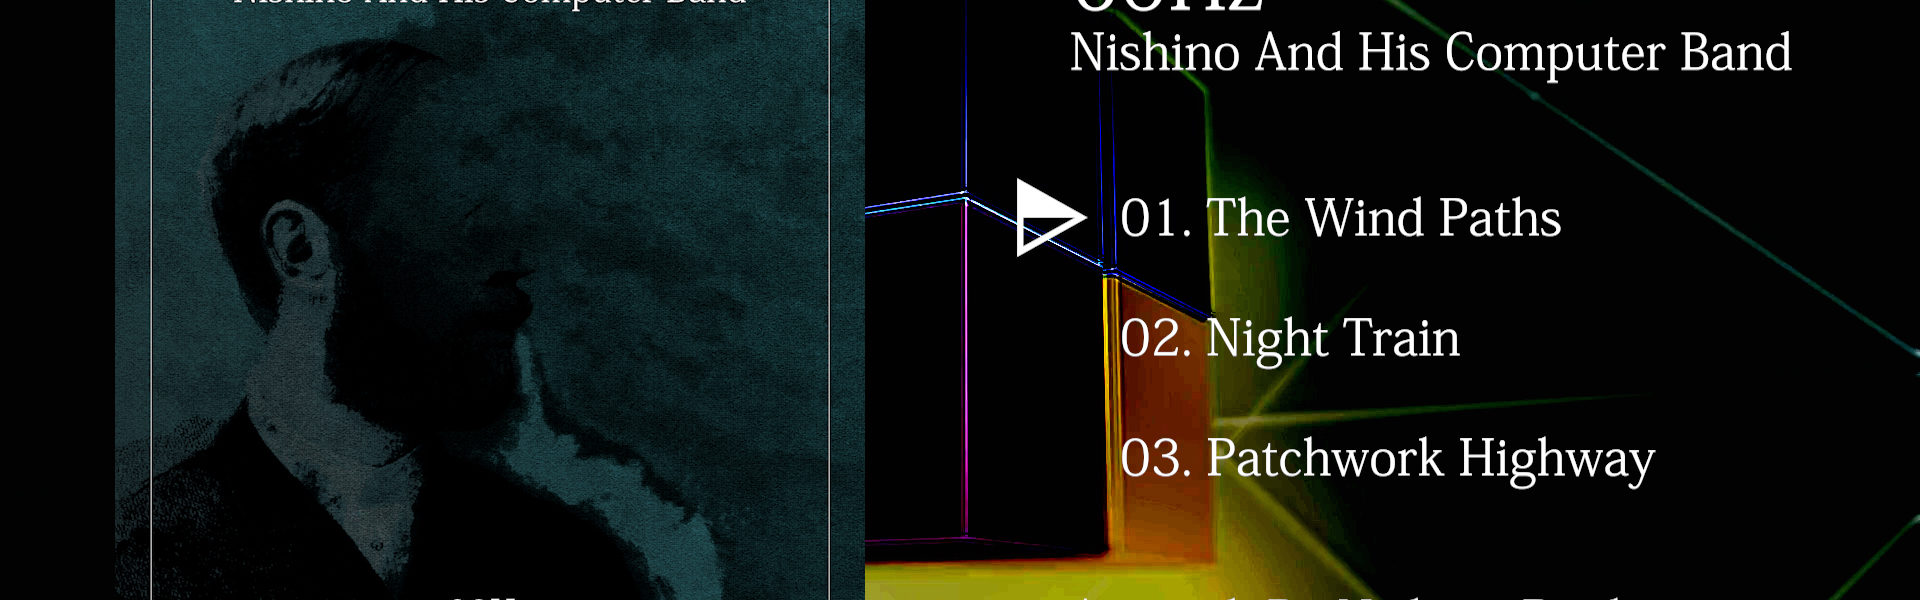 Nishino And His Computer Bandの1stアルバム「60Hz」のサムネイル画像